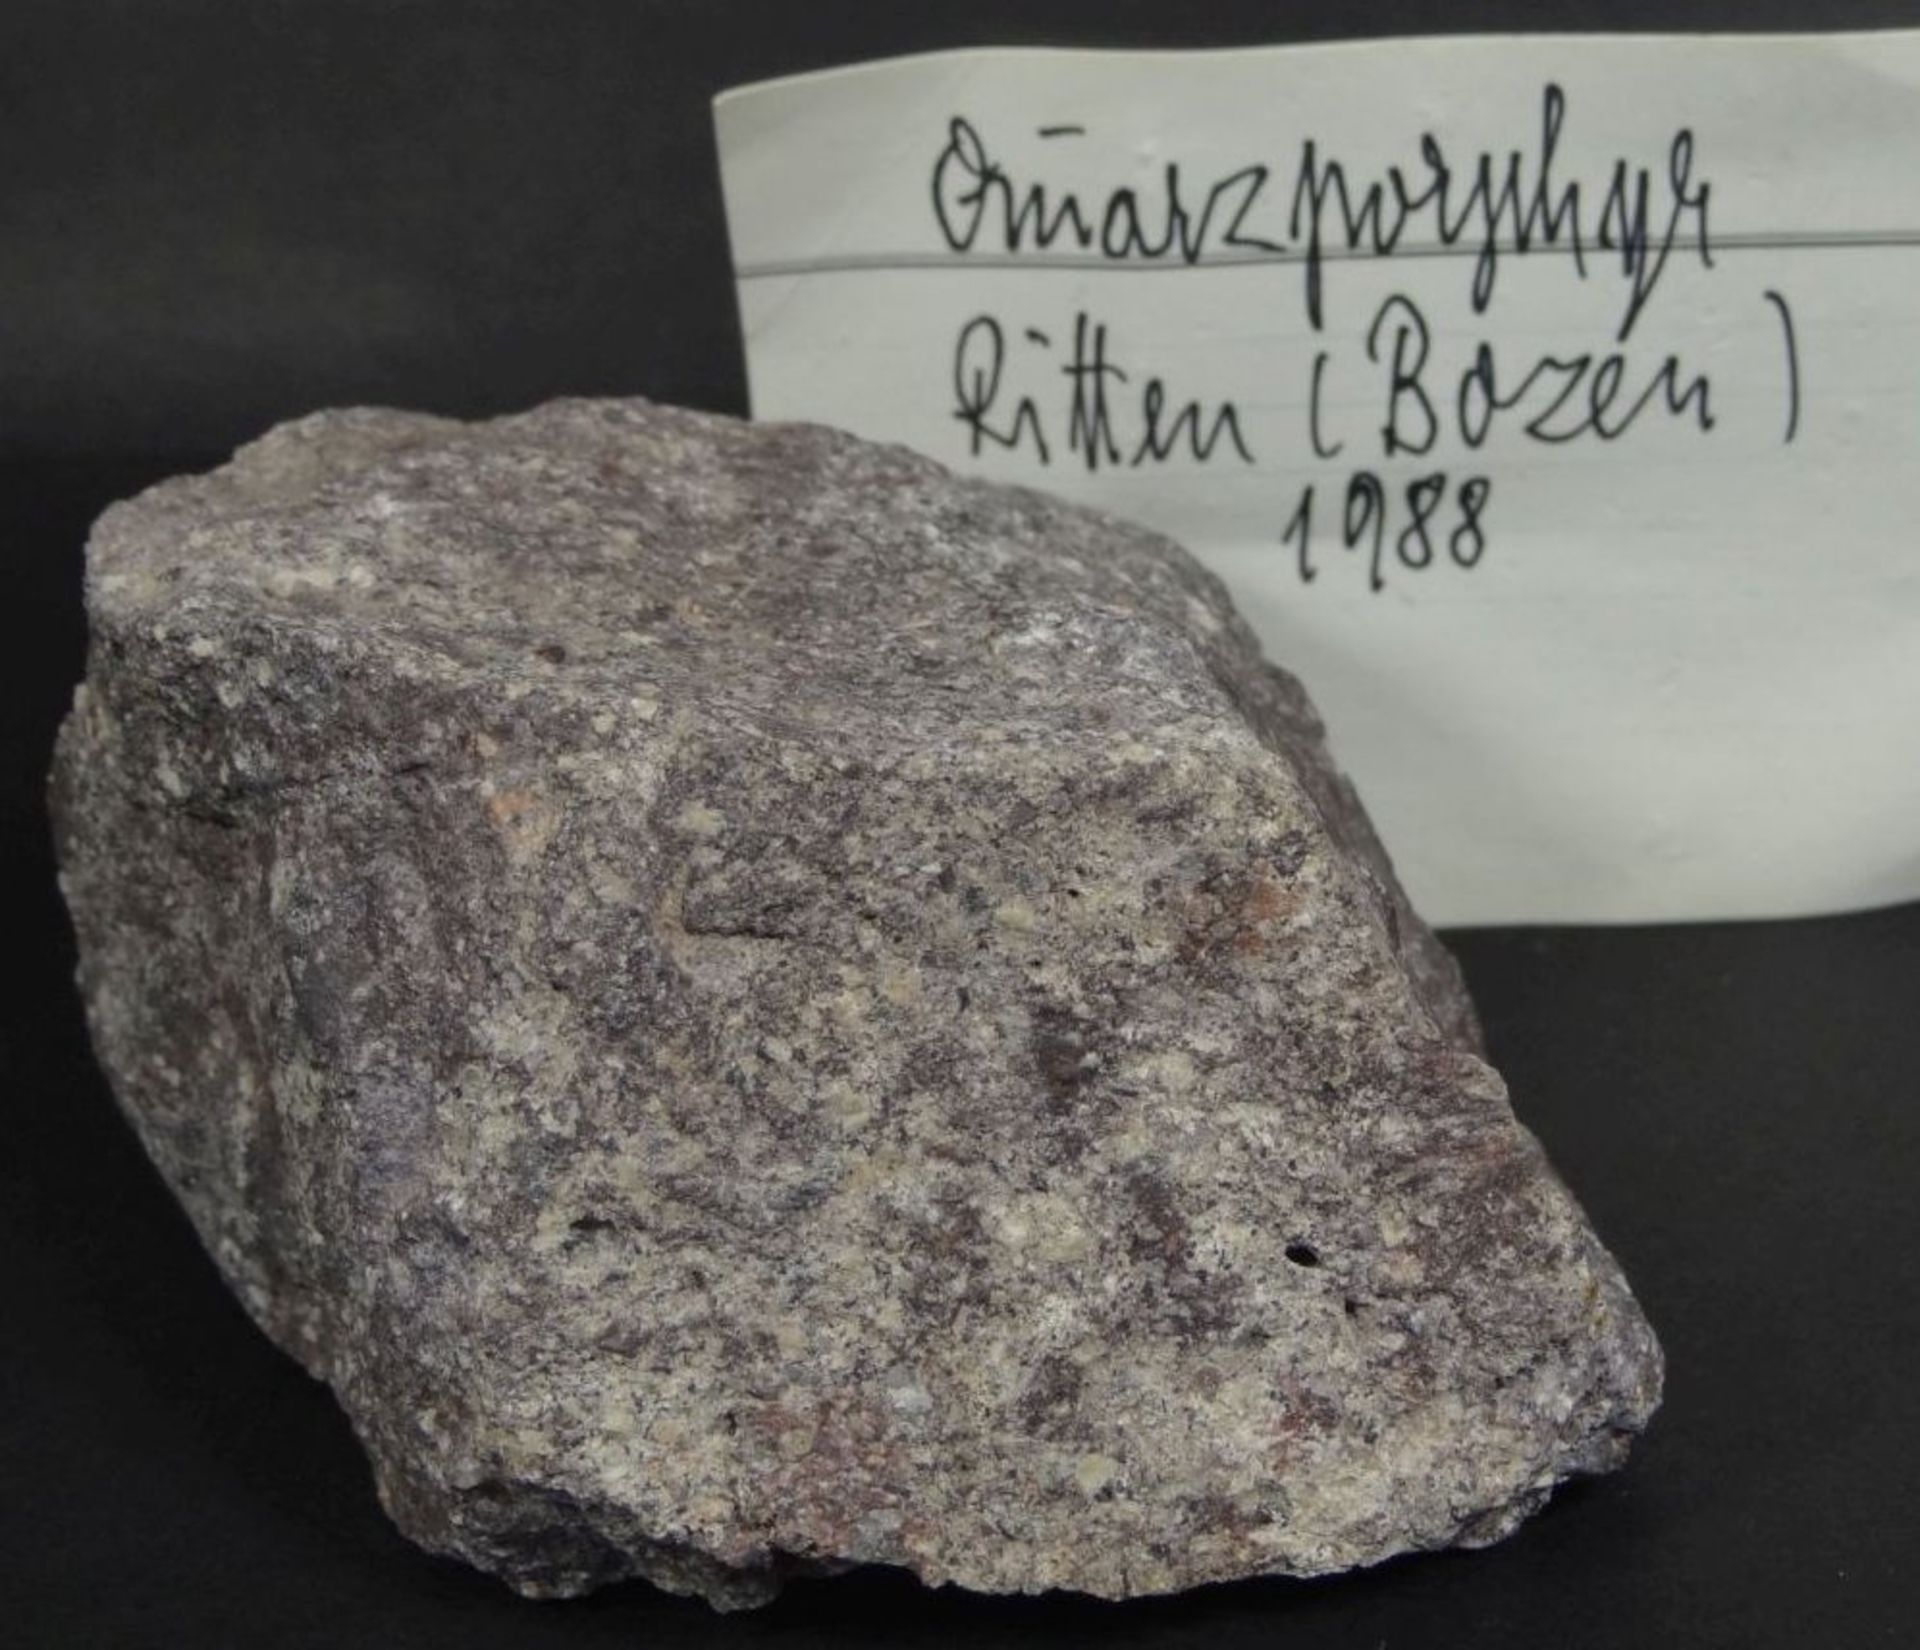 grosses Stück Mineral/Stein?, "Quarzphosphor" Fundort Bozen, 11x8x6 c